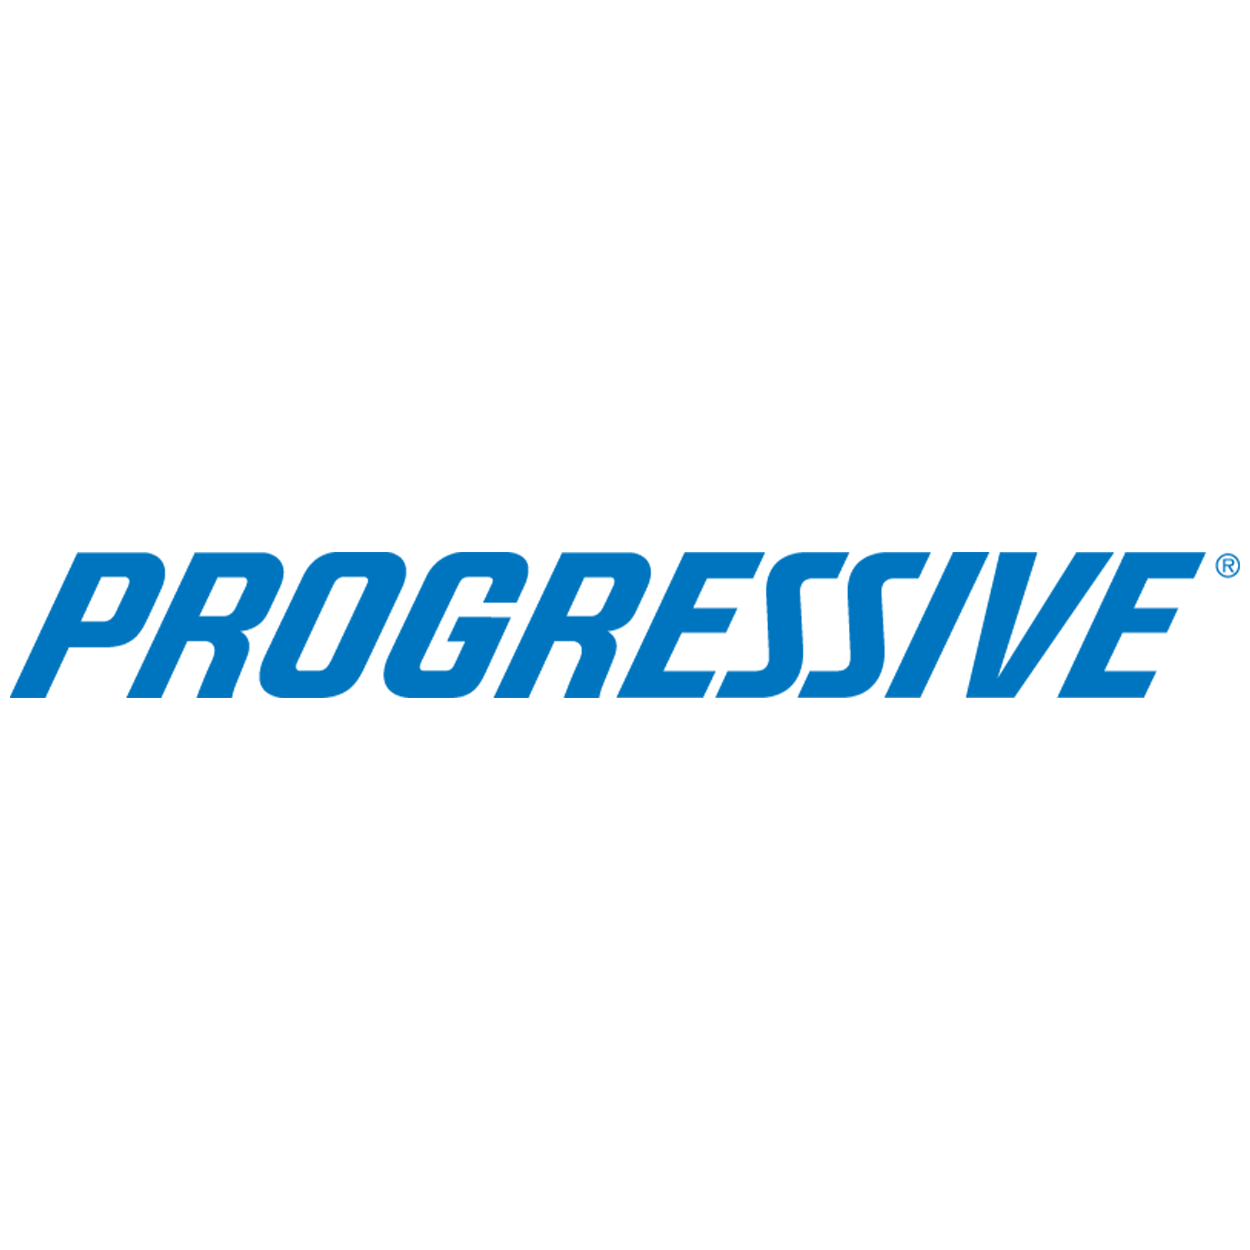 Progressive Official Show Sponsor Logo 